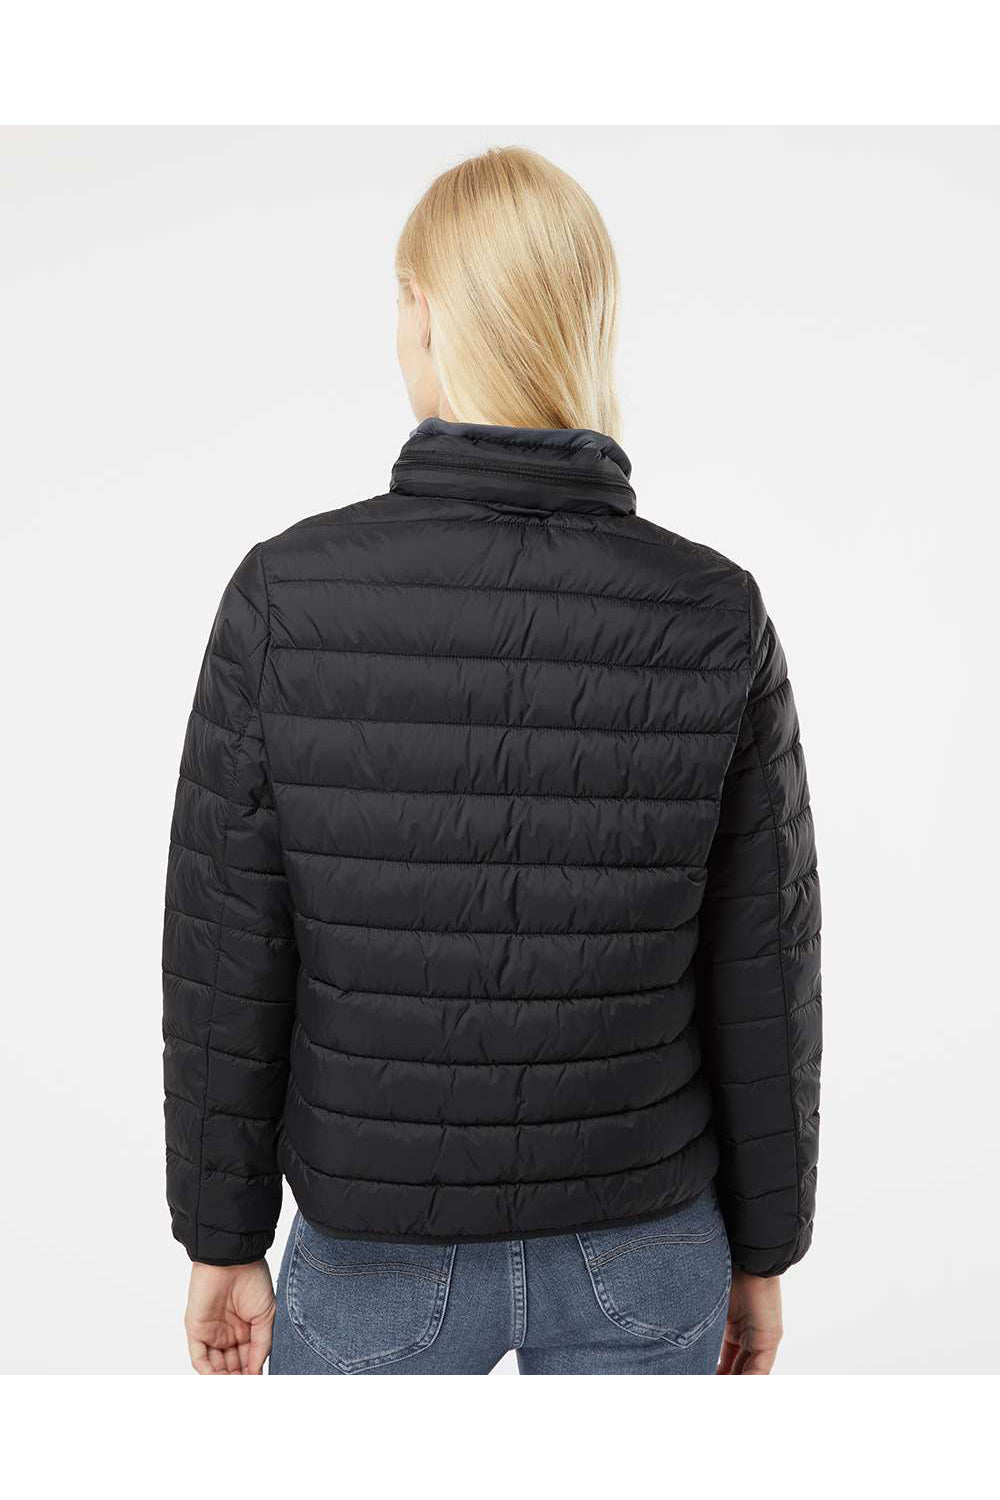 Weatherproof 211137 Womens PillowPac Full Zip Puffer Jacket Black Model Back